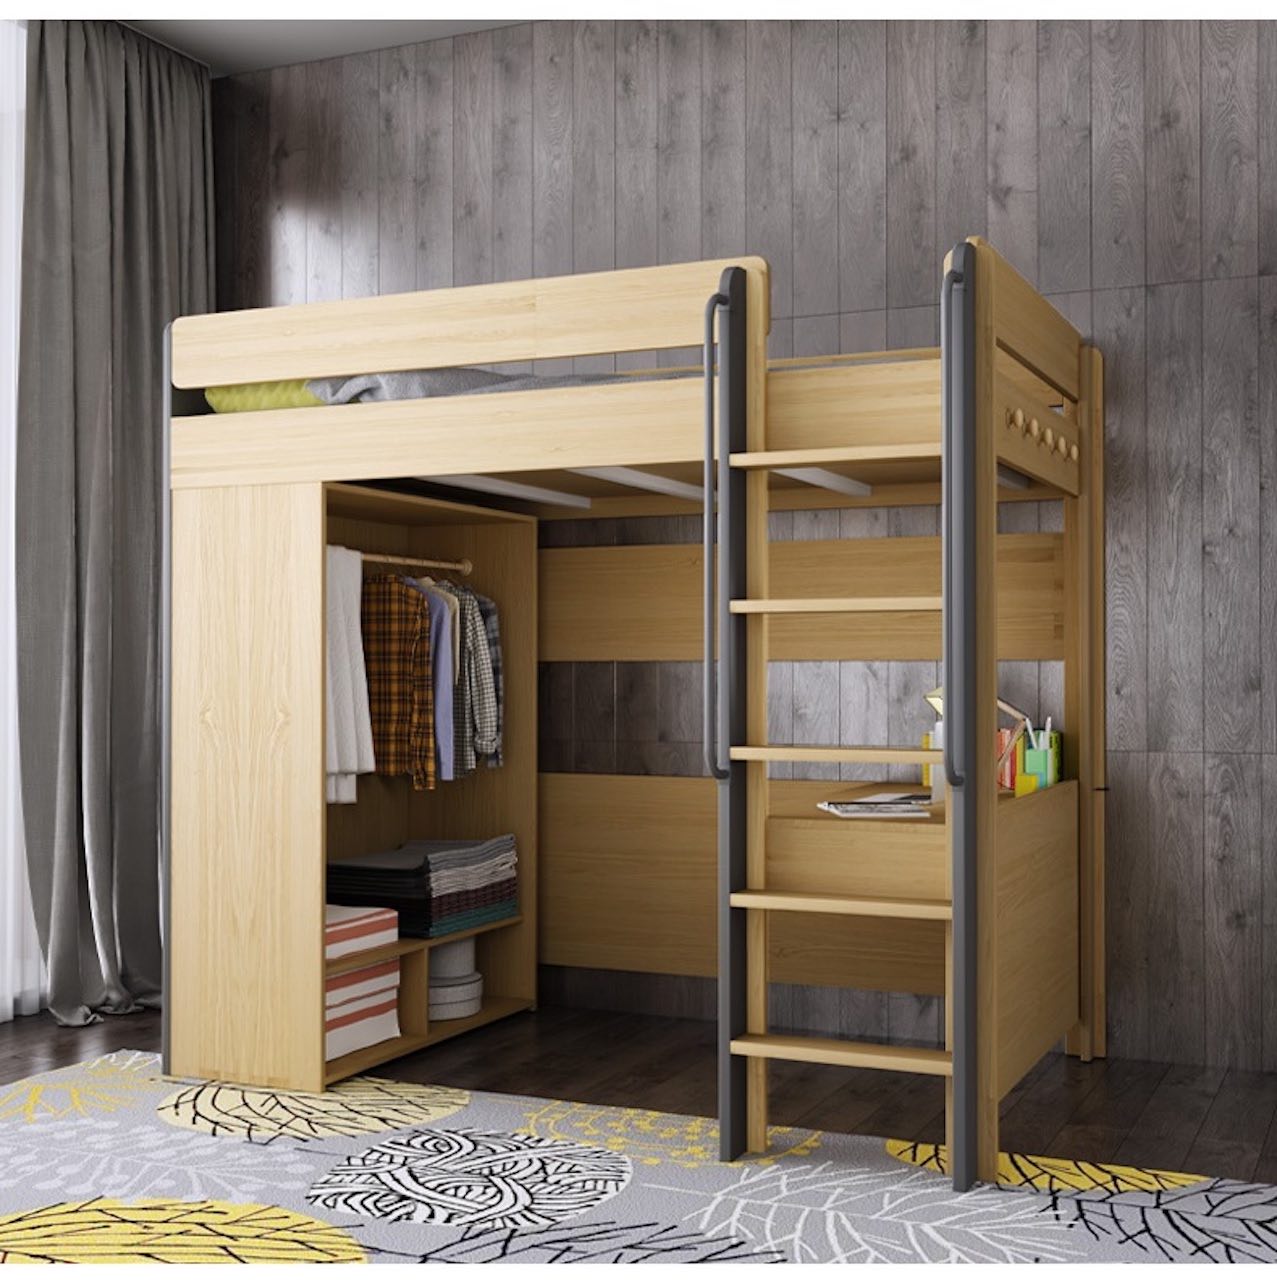 TEOM Loft Bed (Bed + Wardrobe)